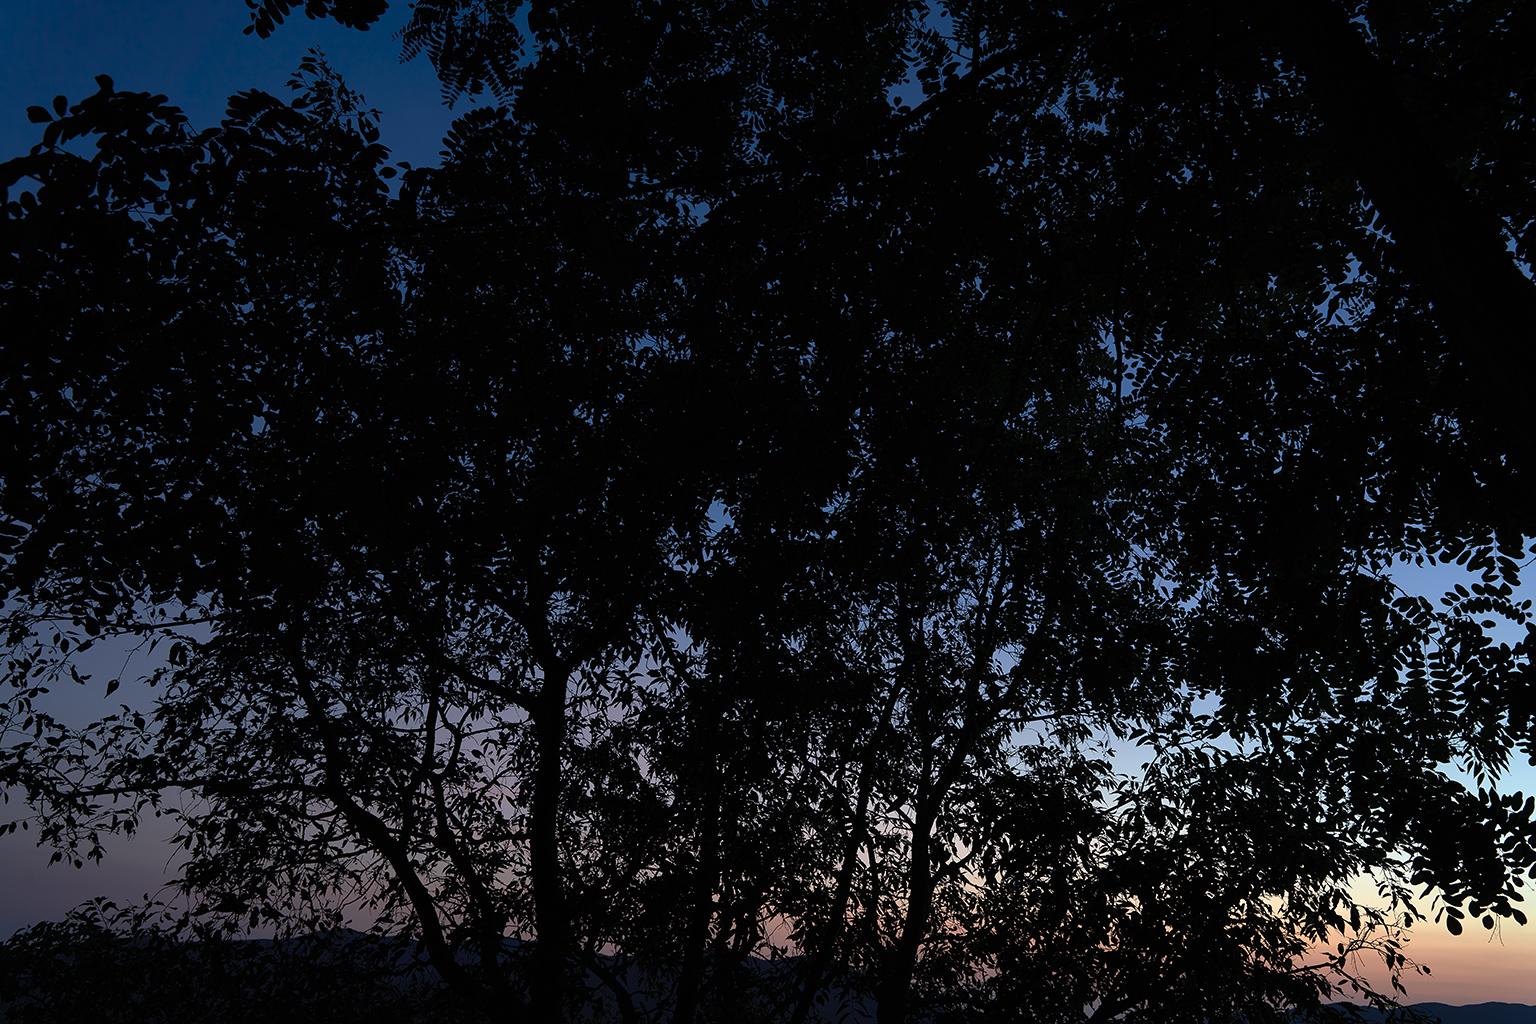 Frank Schott Landscape Print - Blue Hour - large format photograph of ethereal foliage against evening sky